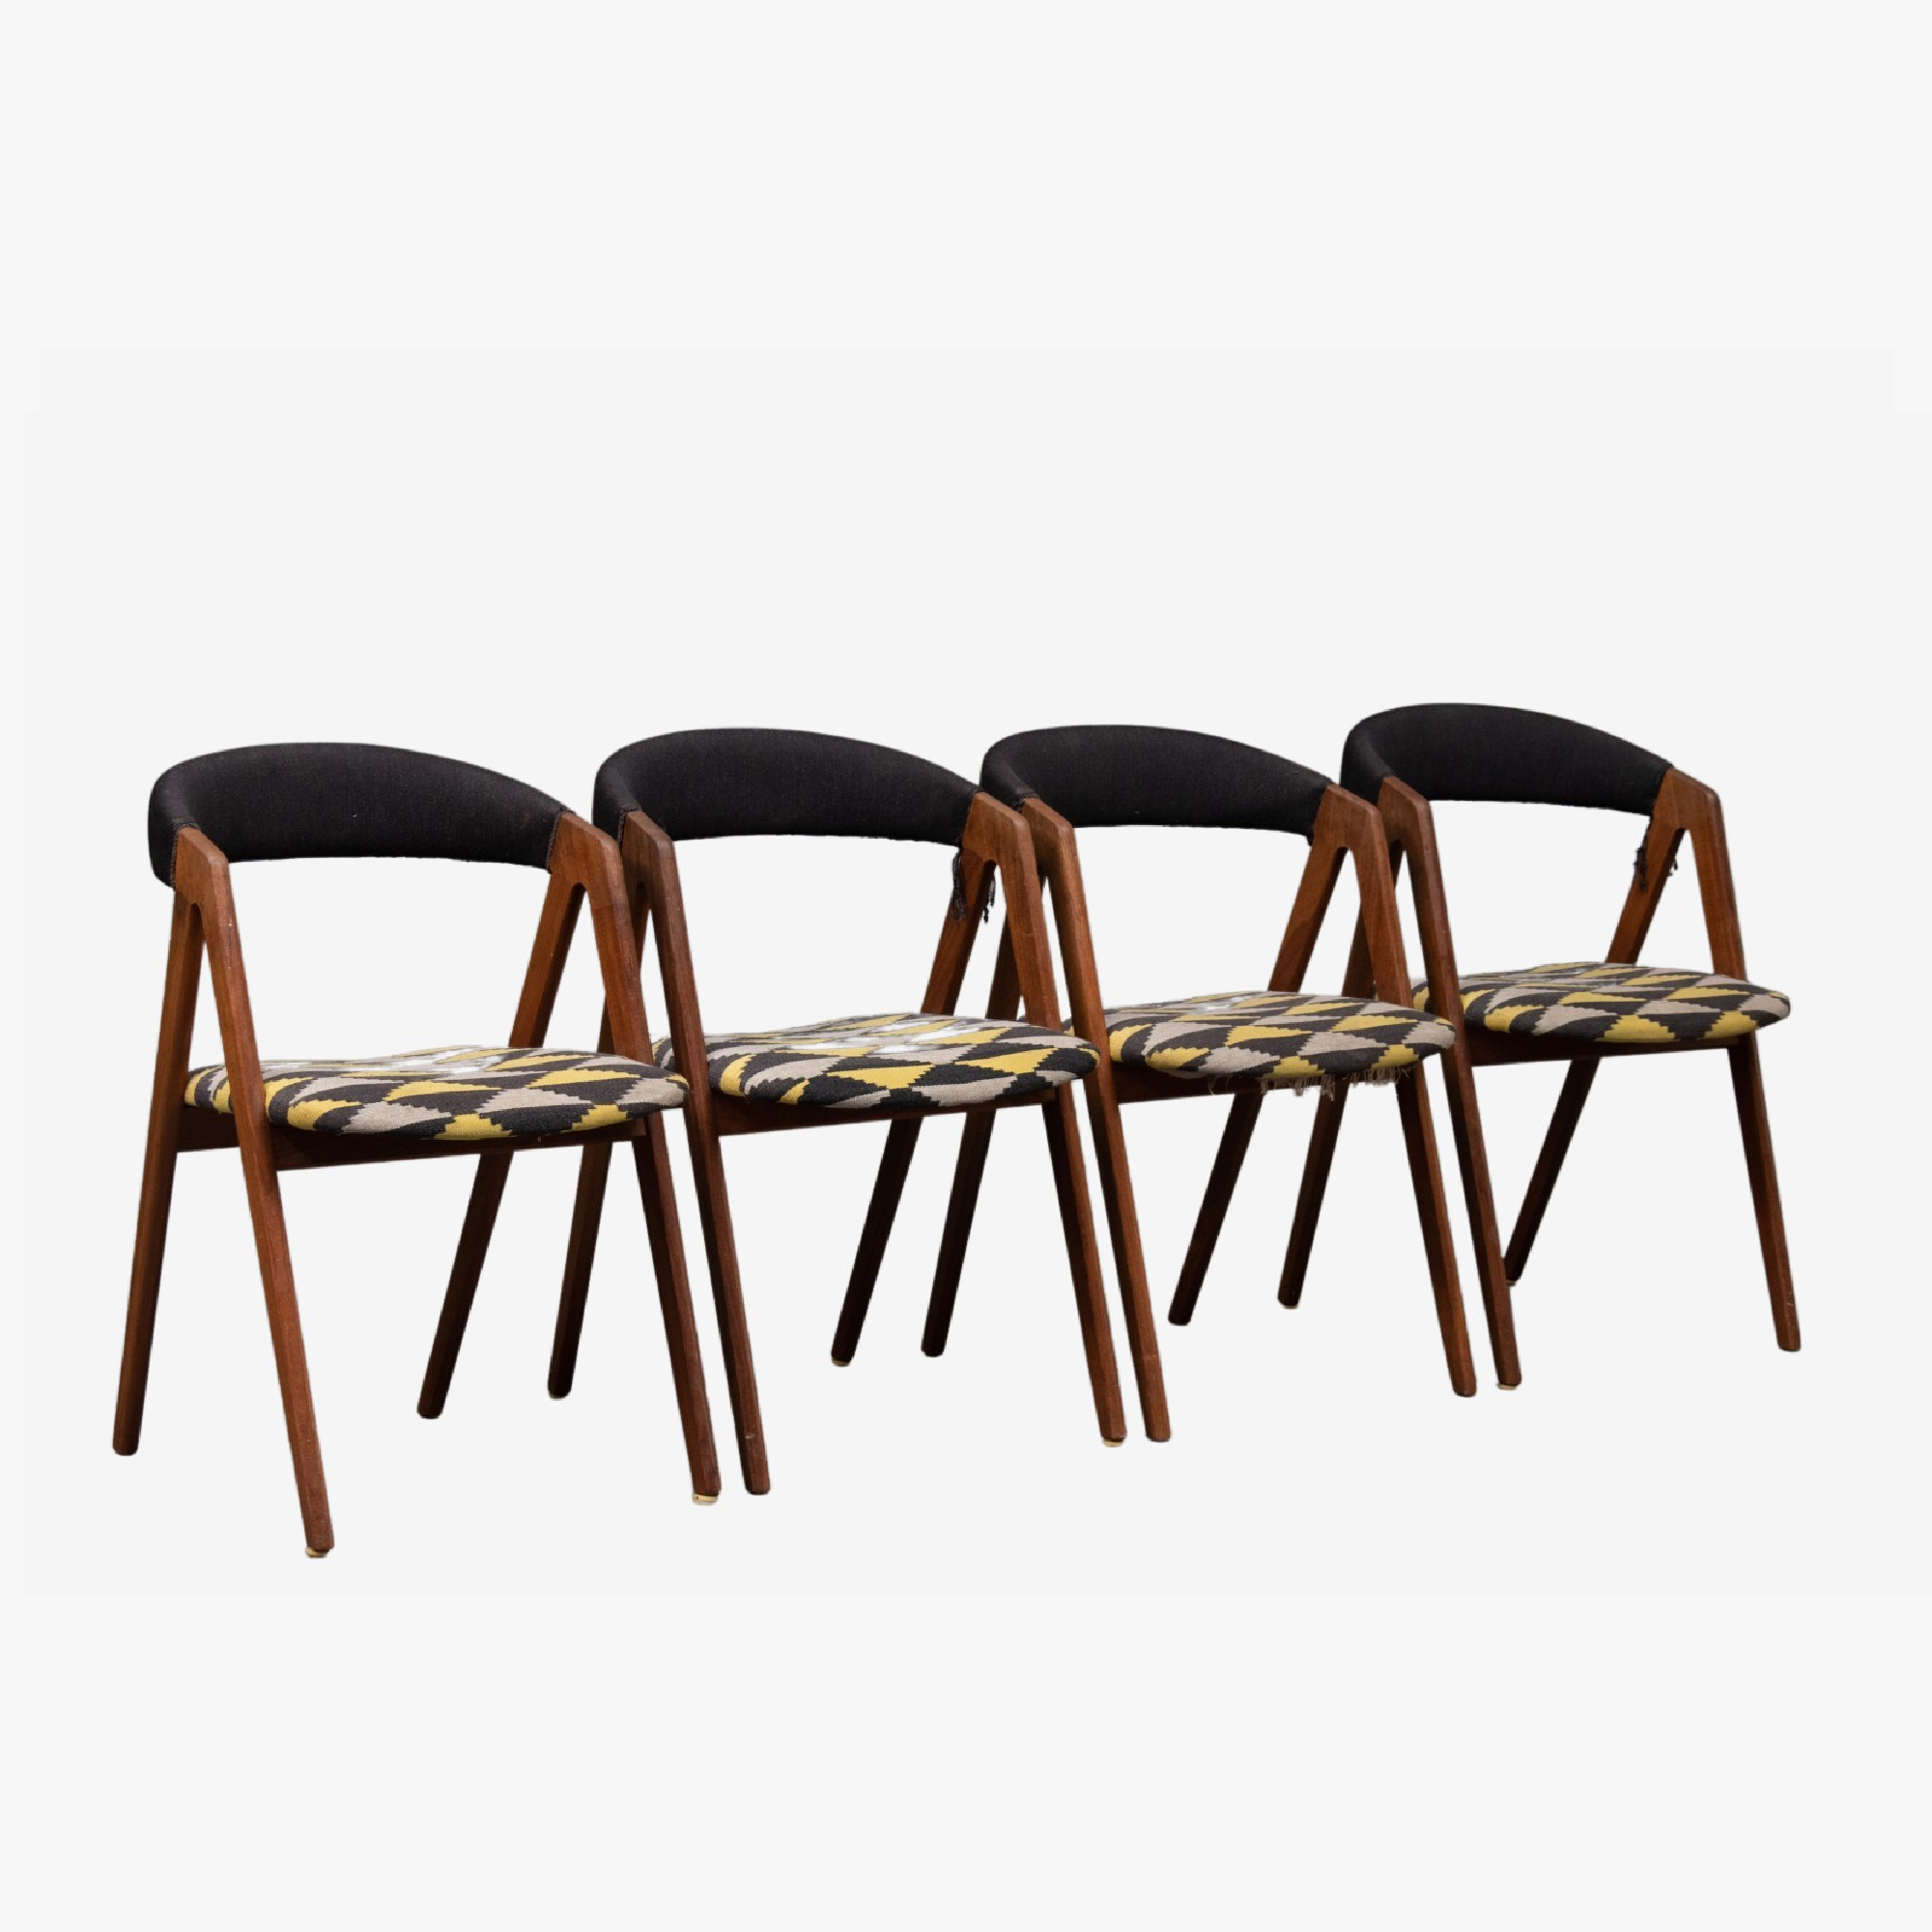 Danish teak chairs